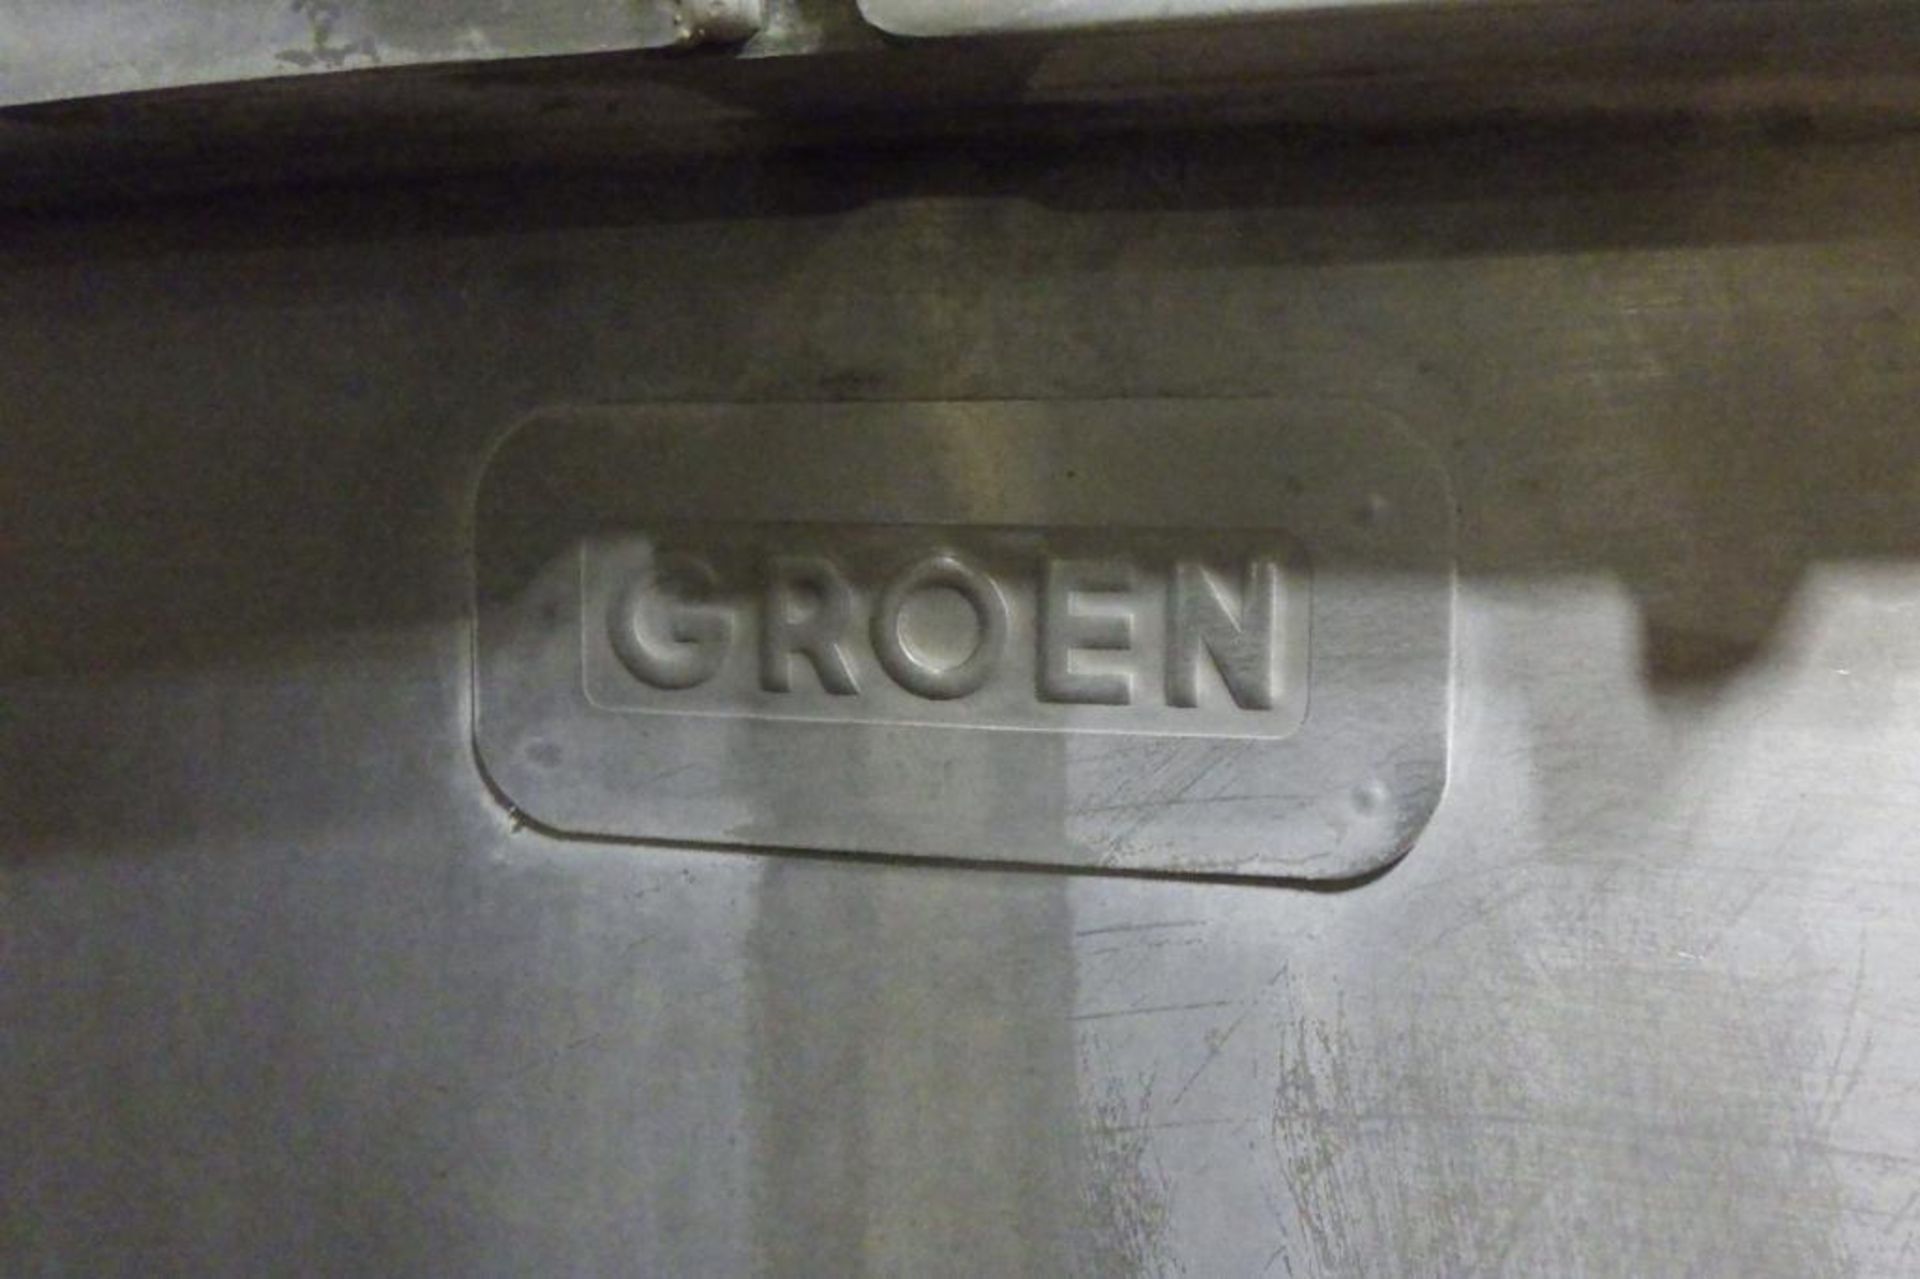 Groen kettle - Image 11 of 15